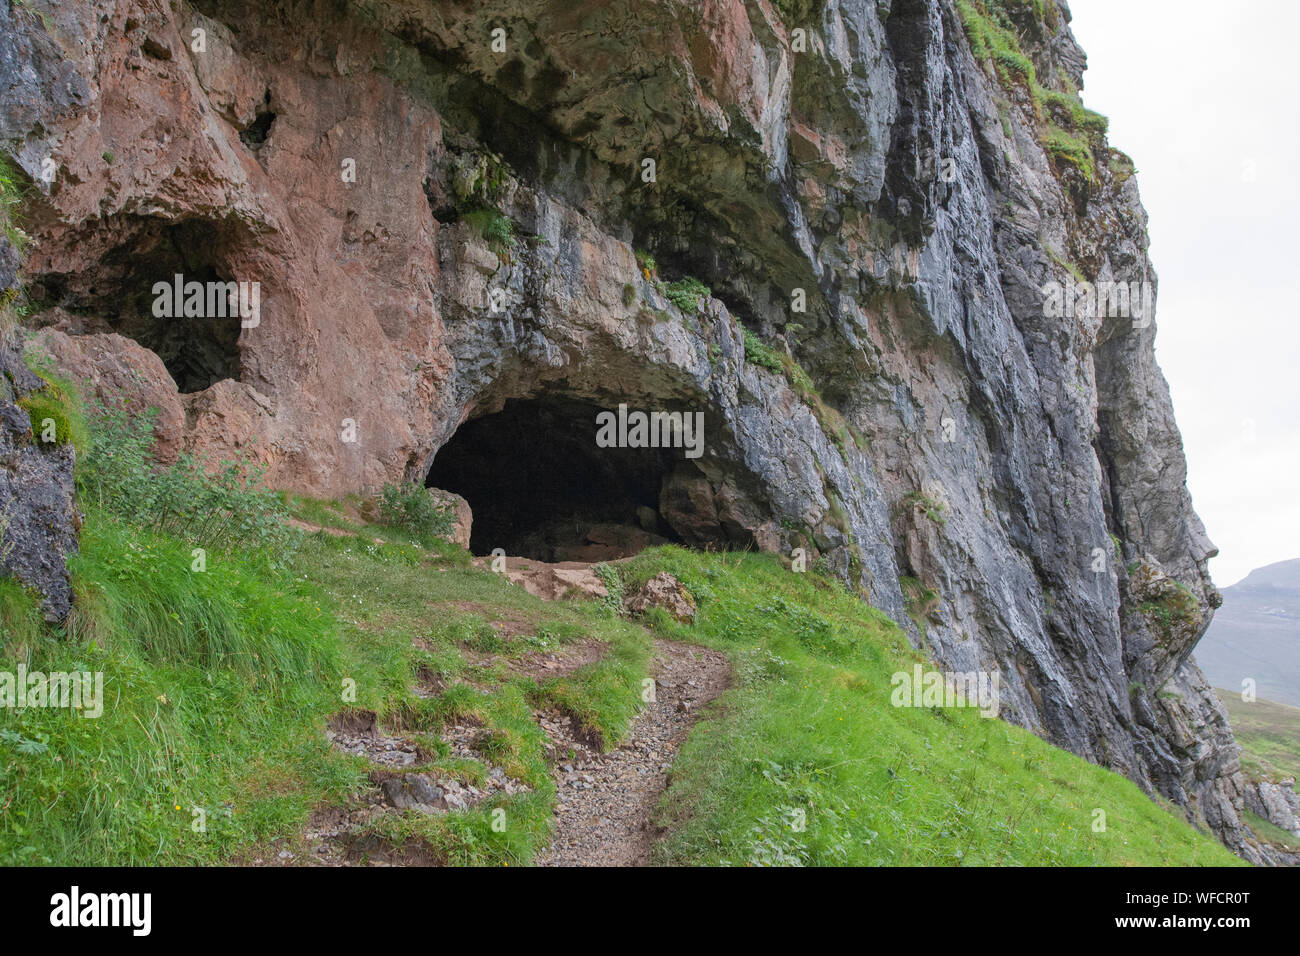 Entrance to Bone caves complex, Allt nan Uamh valley, Inchnadamph, Scotland Stock Photo